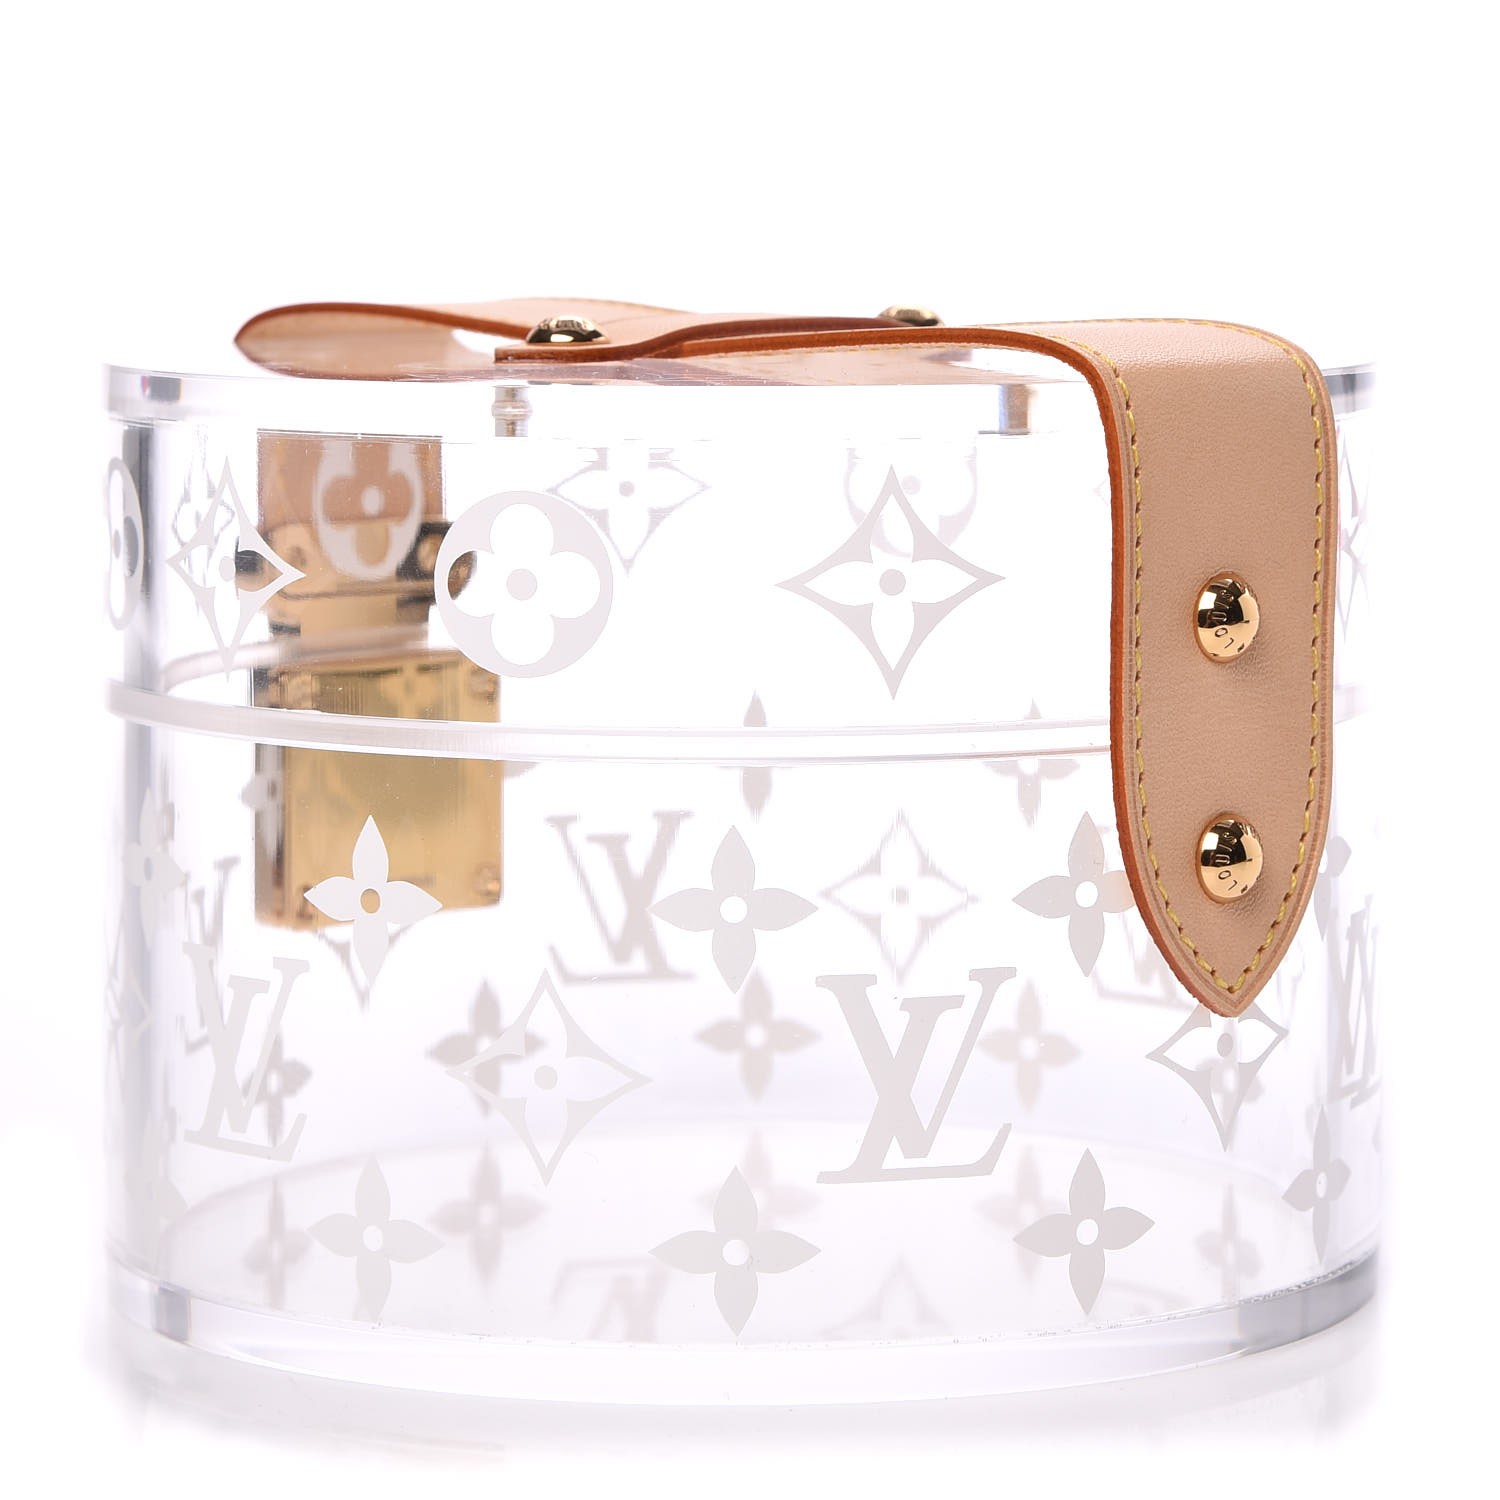 Lv box Scott bag! #lv #louisvuitton #boxscott #handbags #lvbags